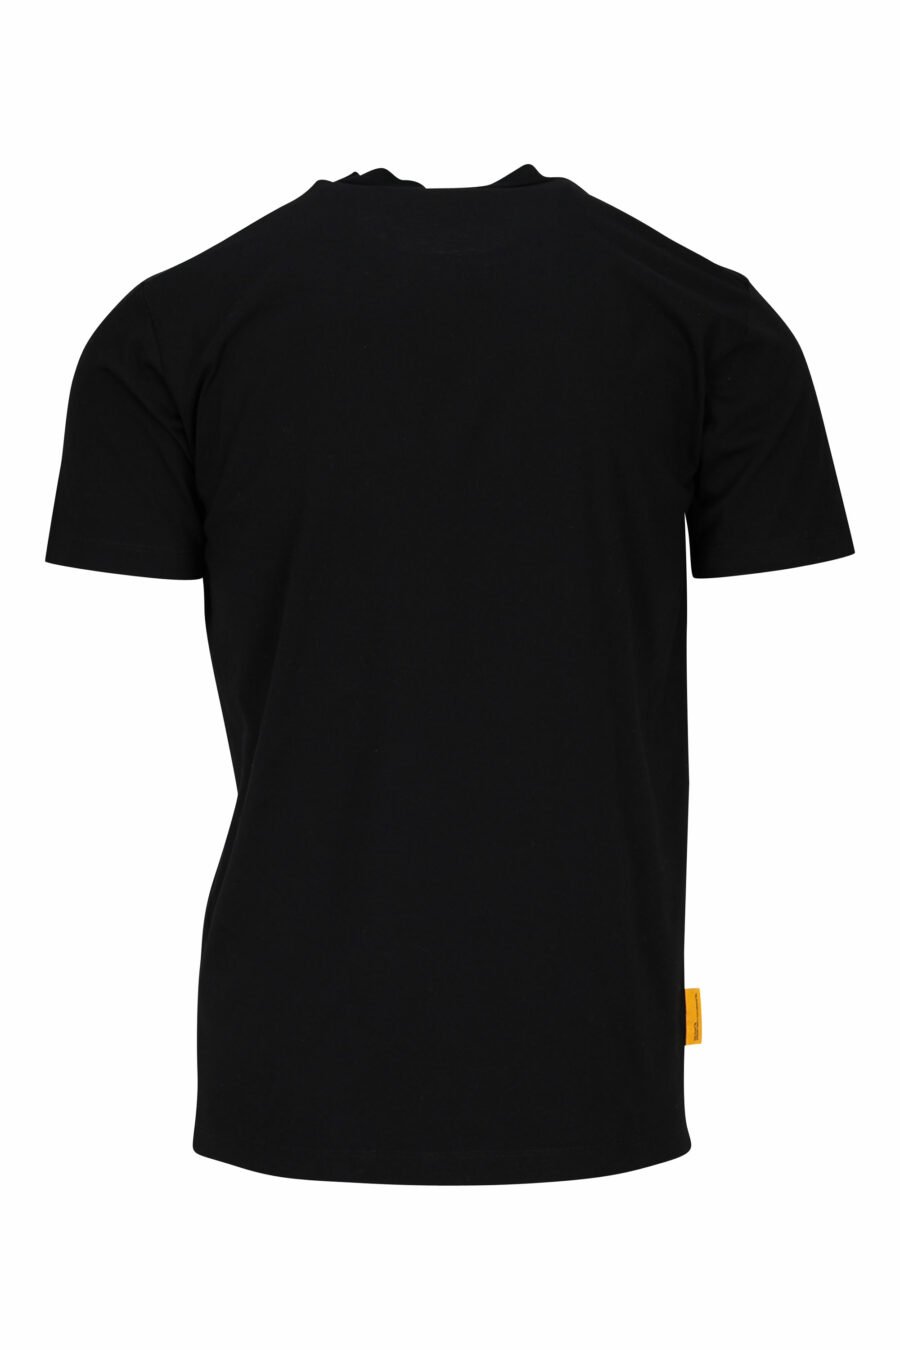 Black T-shirt with "pac-man" ghost maxilogo - 8054148203801 1